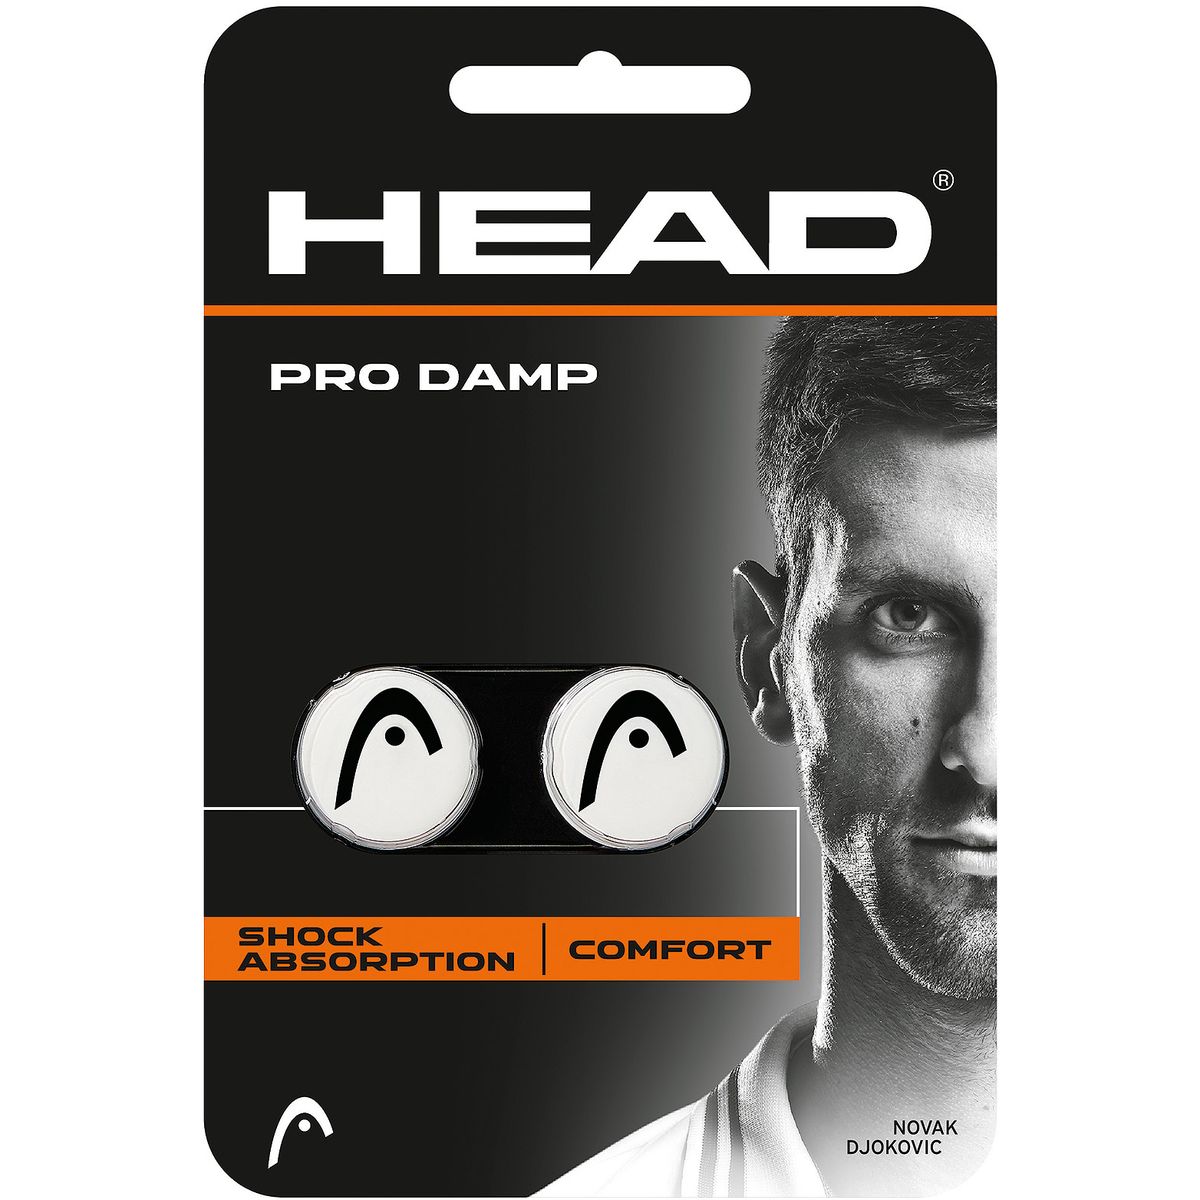 Head Pro Damp 2 Pcs Pack attopt_internal_category_online_shop_124960